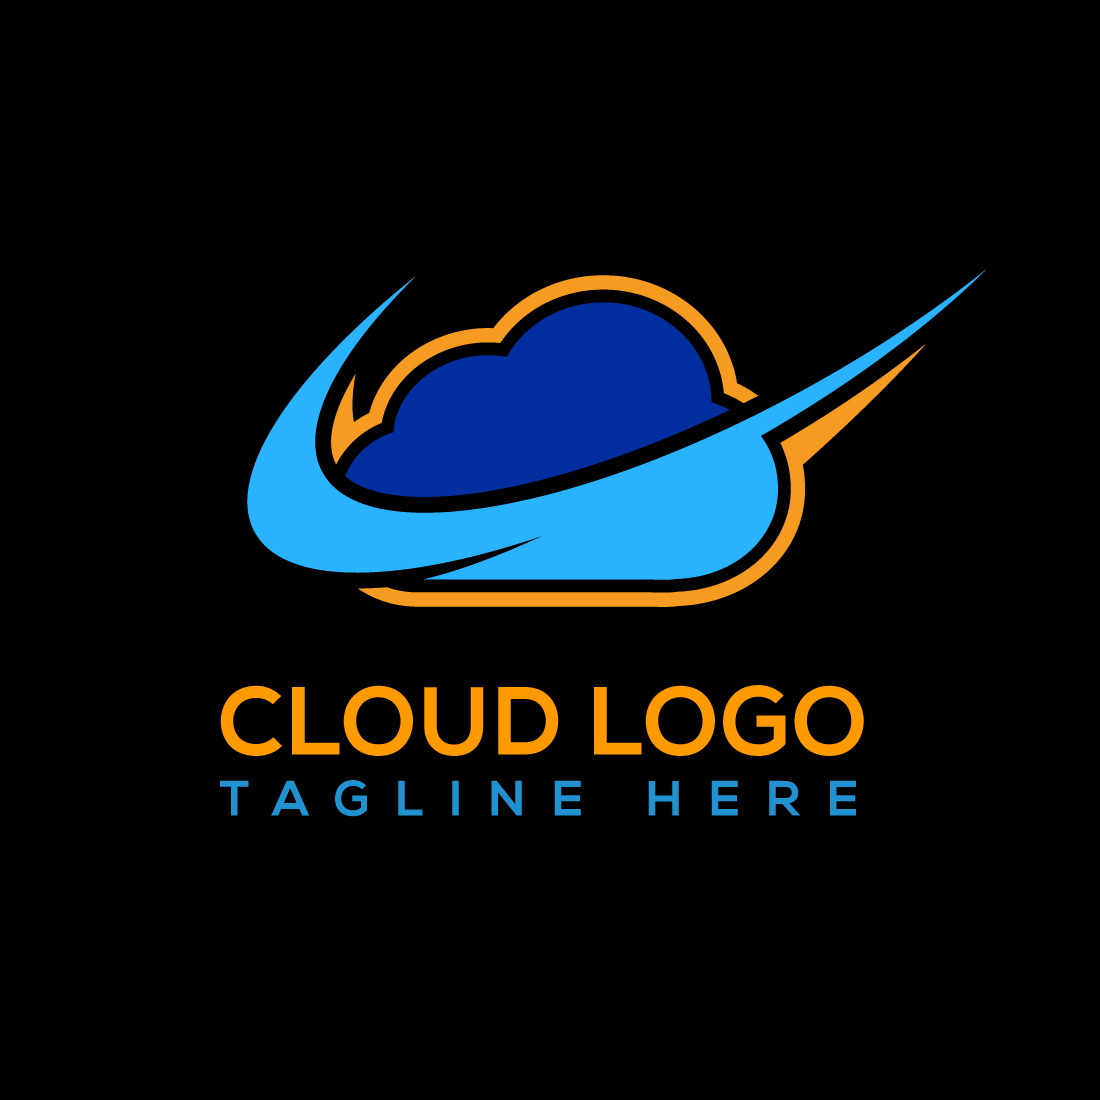 Technology Cloud Logo Design cover image.